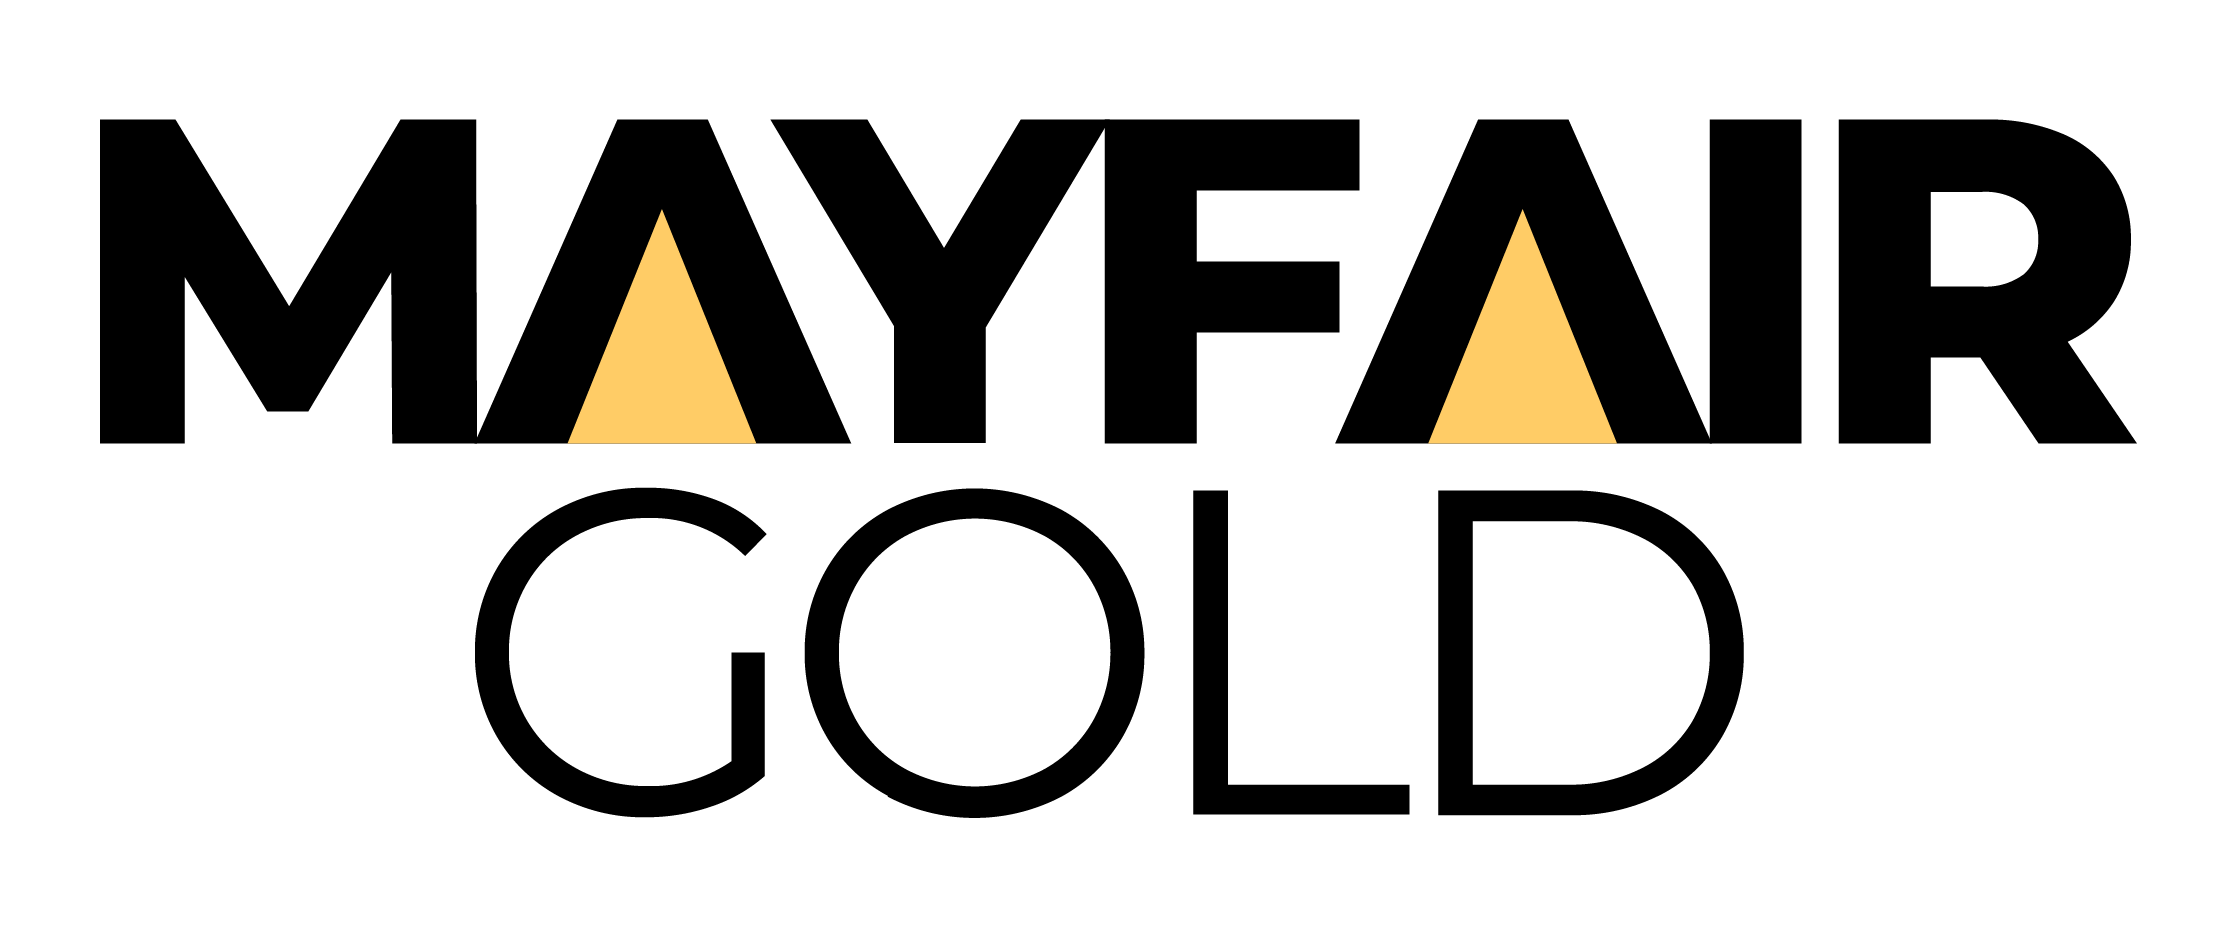 Mayfair Logo - Vector Rectangle 1-01.png